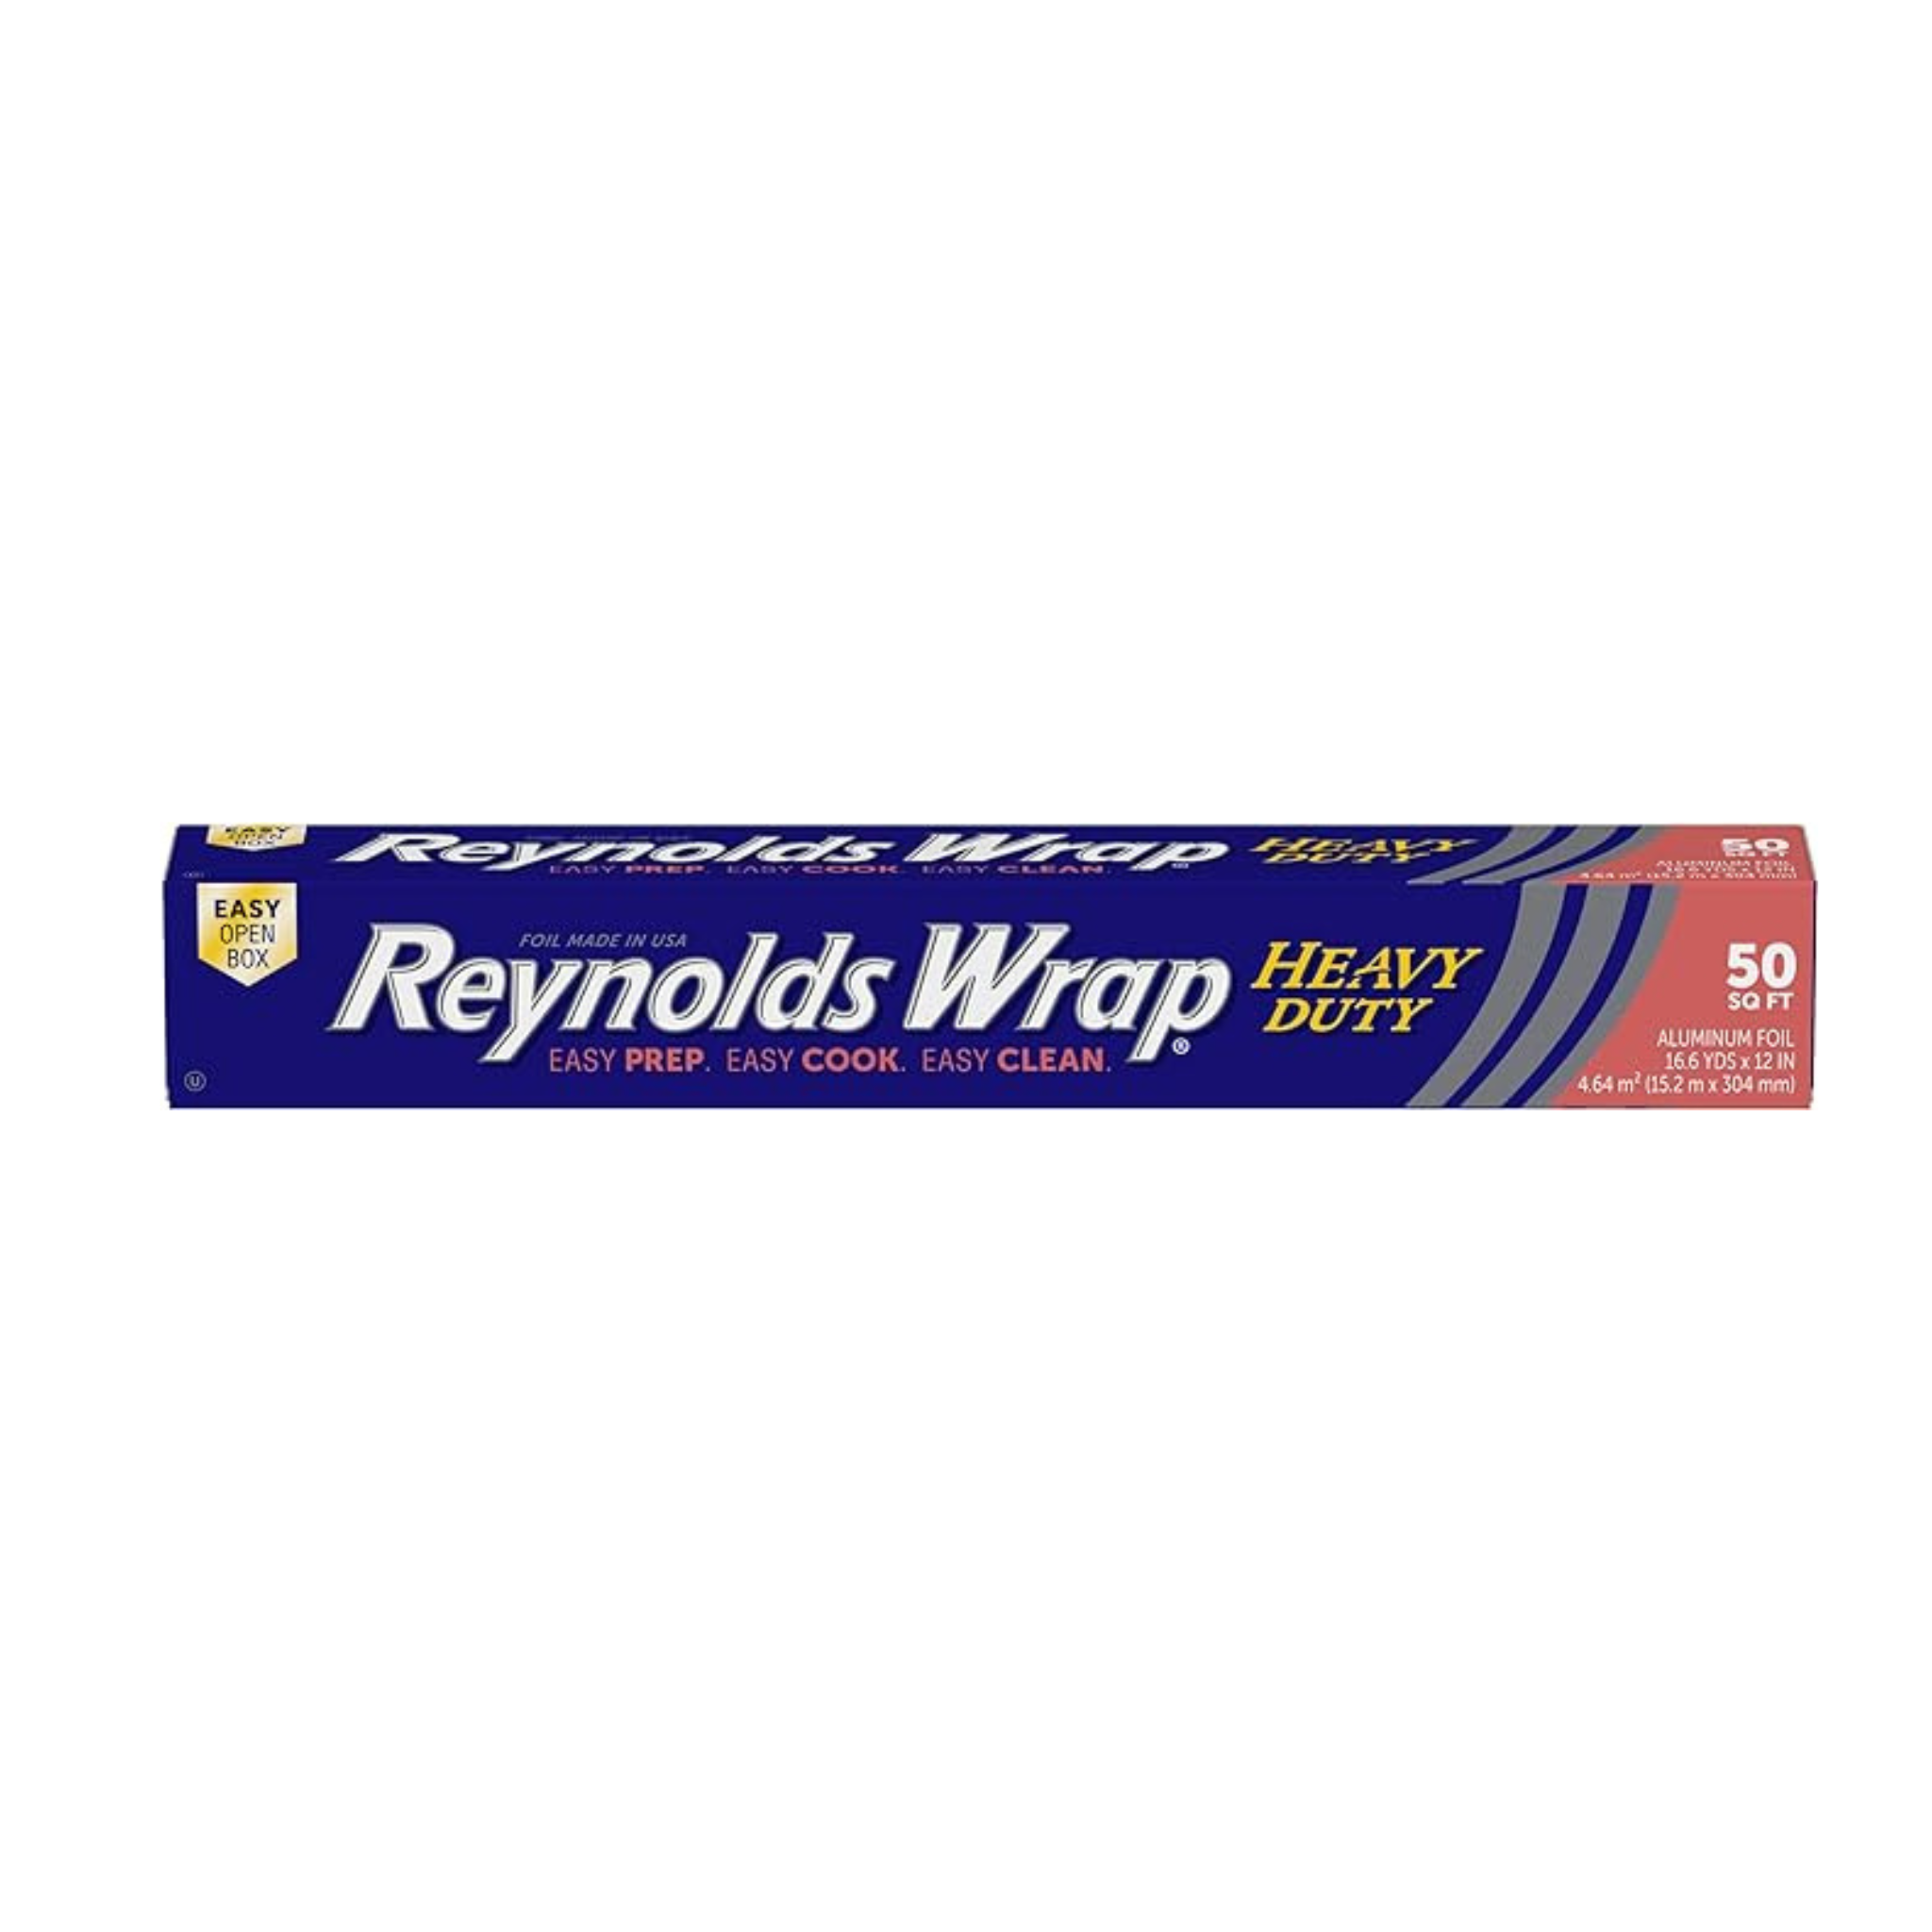 50-Sq. Ft. Reynolds Wrap Heavy Duty Aluminum Foil Roll